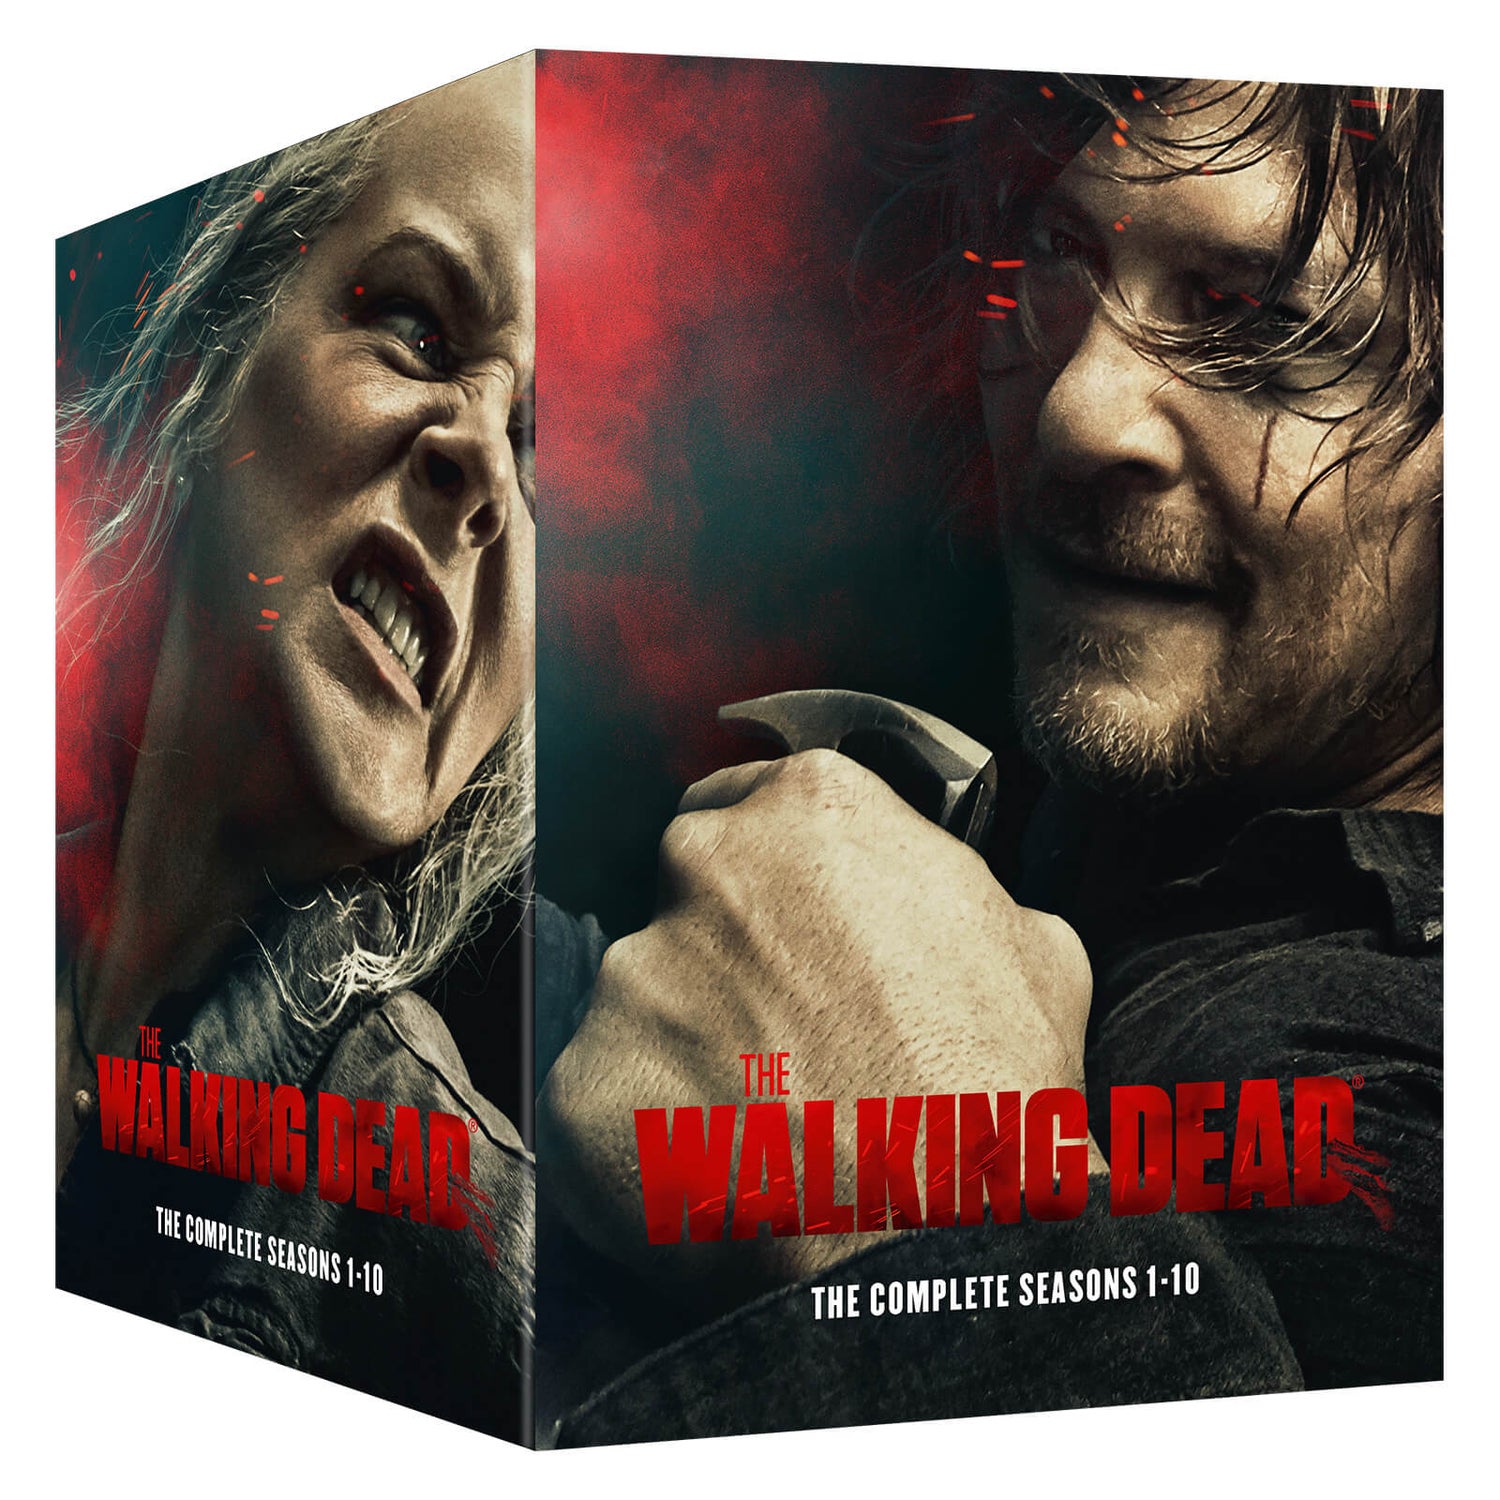 The Walking Dead: The Complete Seasons 1-10 Boxset